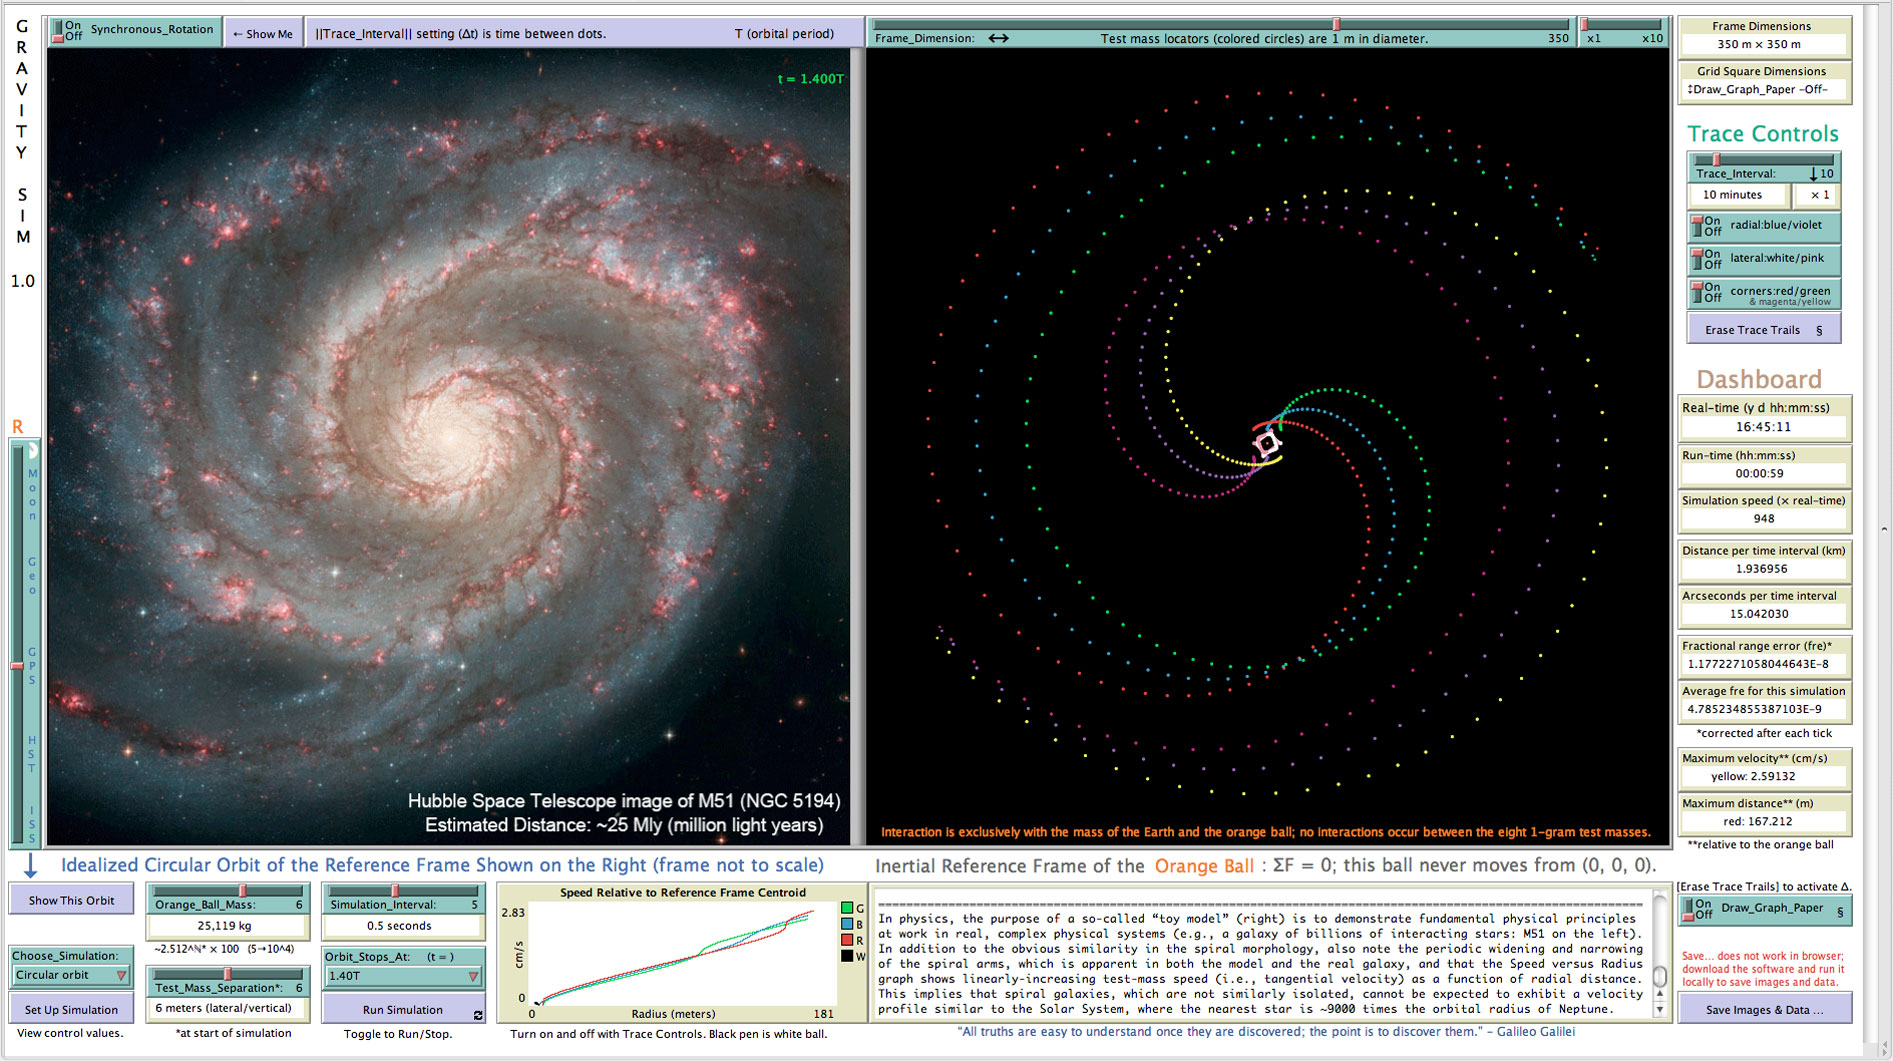 gravity simulation producing spiral galaxy morphology